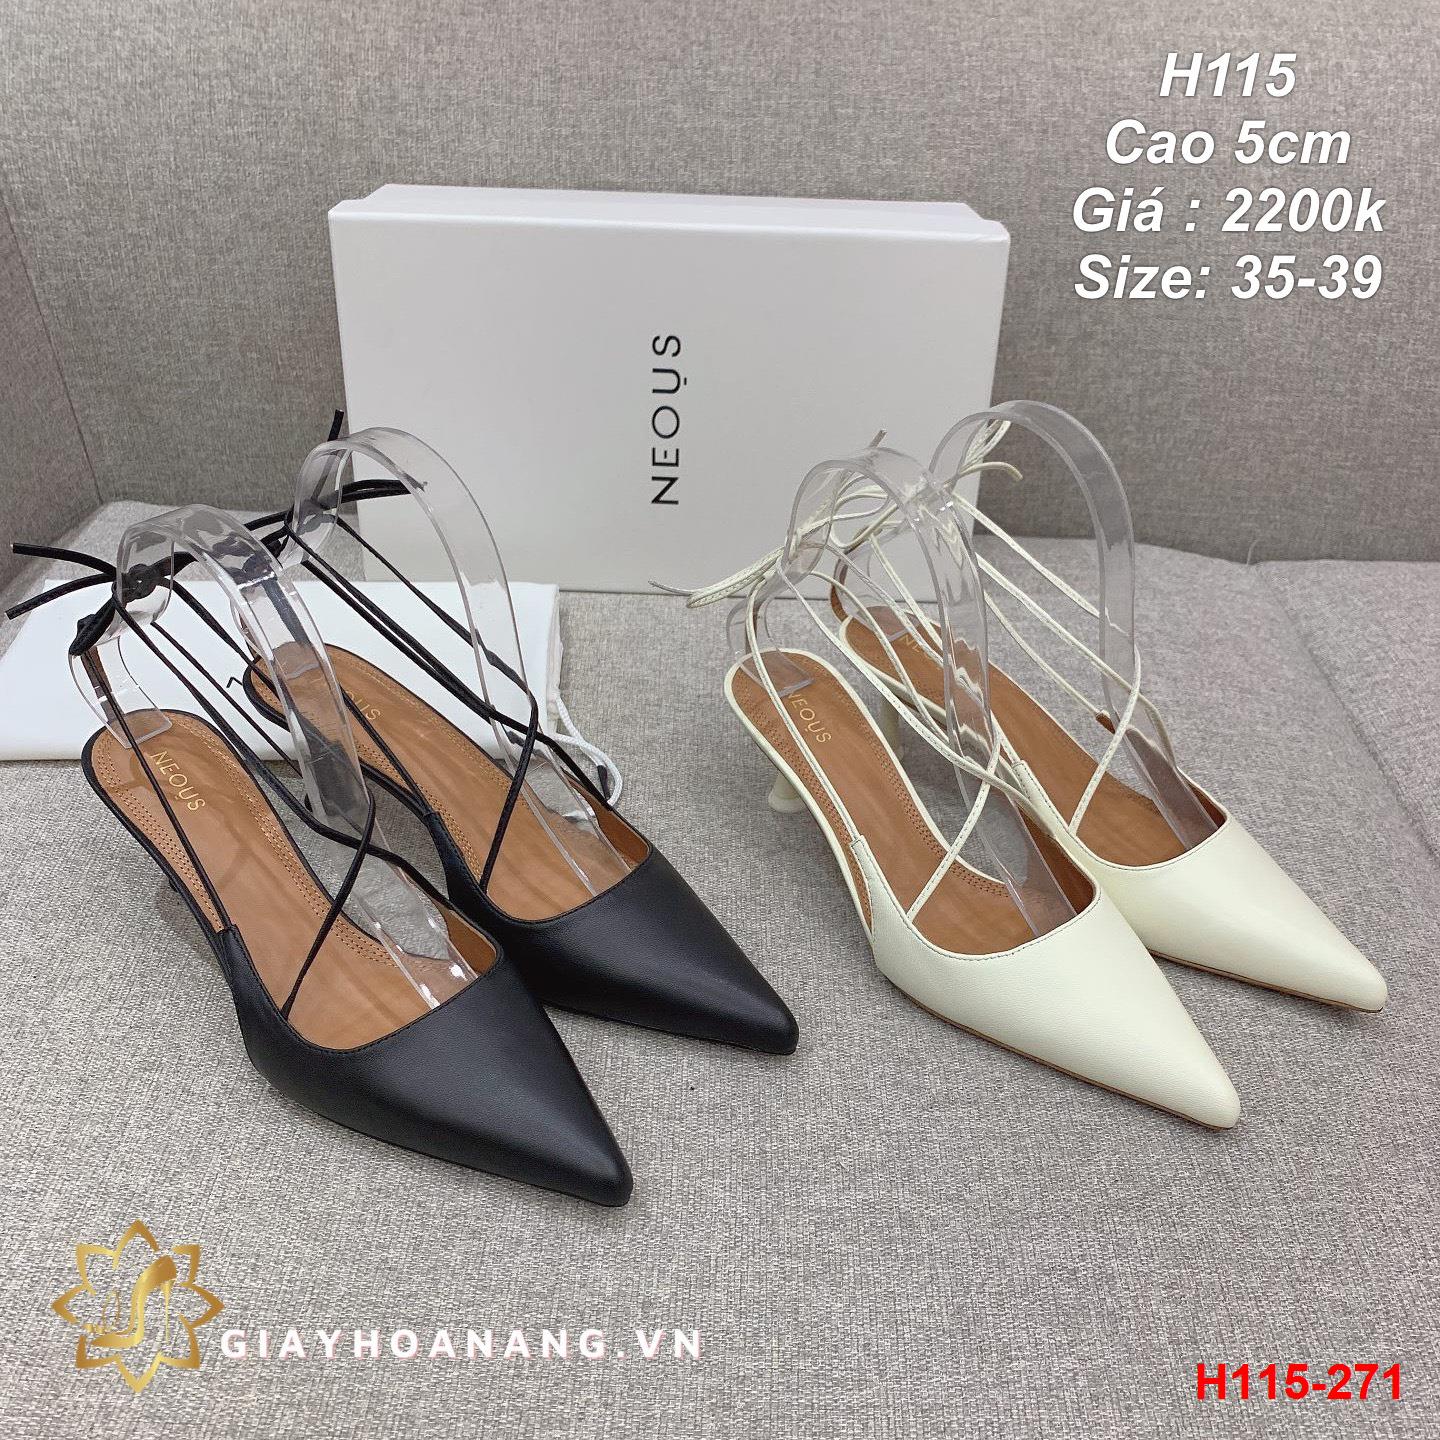 H115-271 Neous sandal cao 5cm siêu cấp